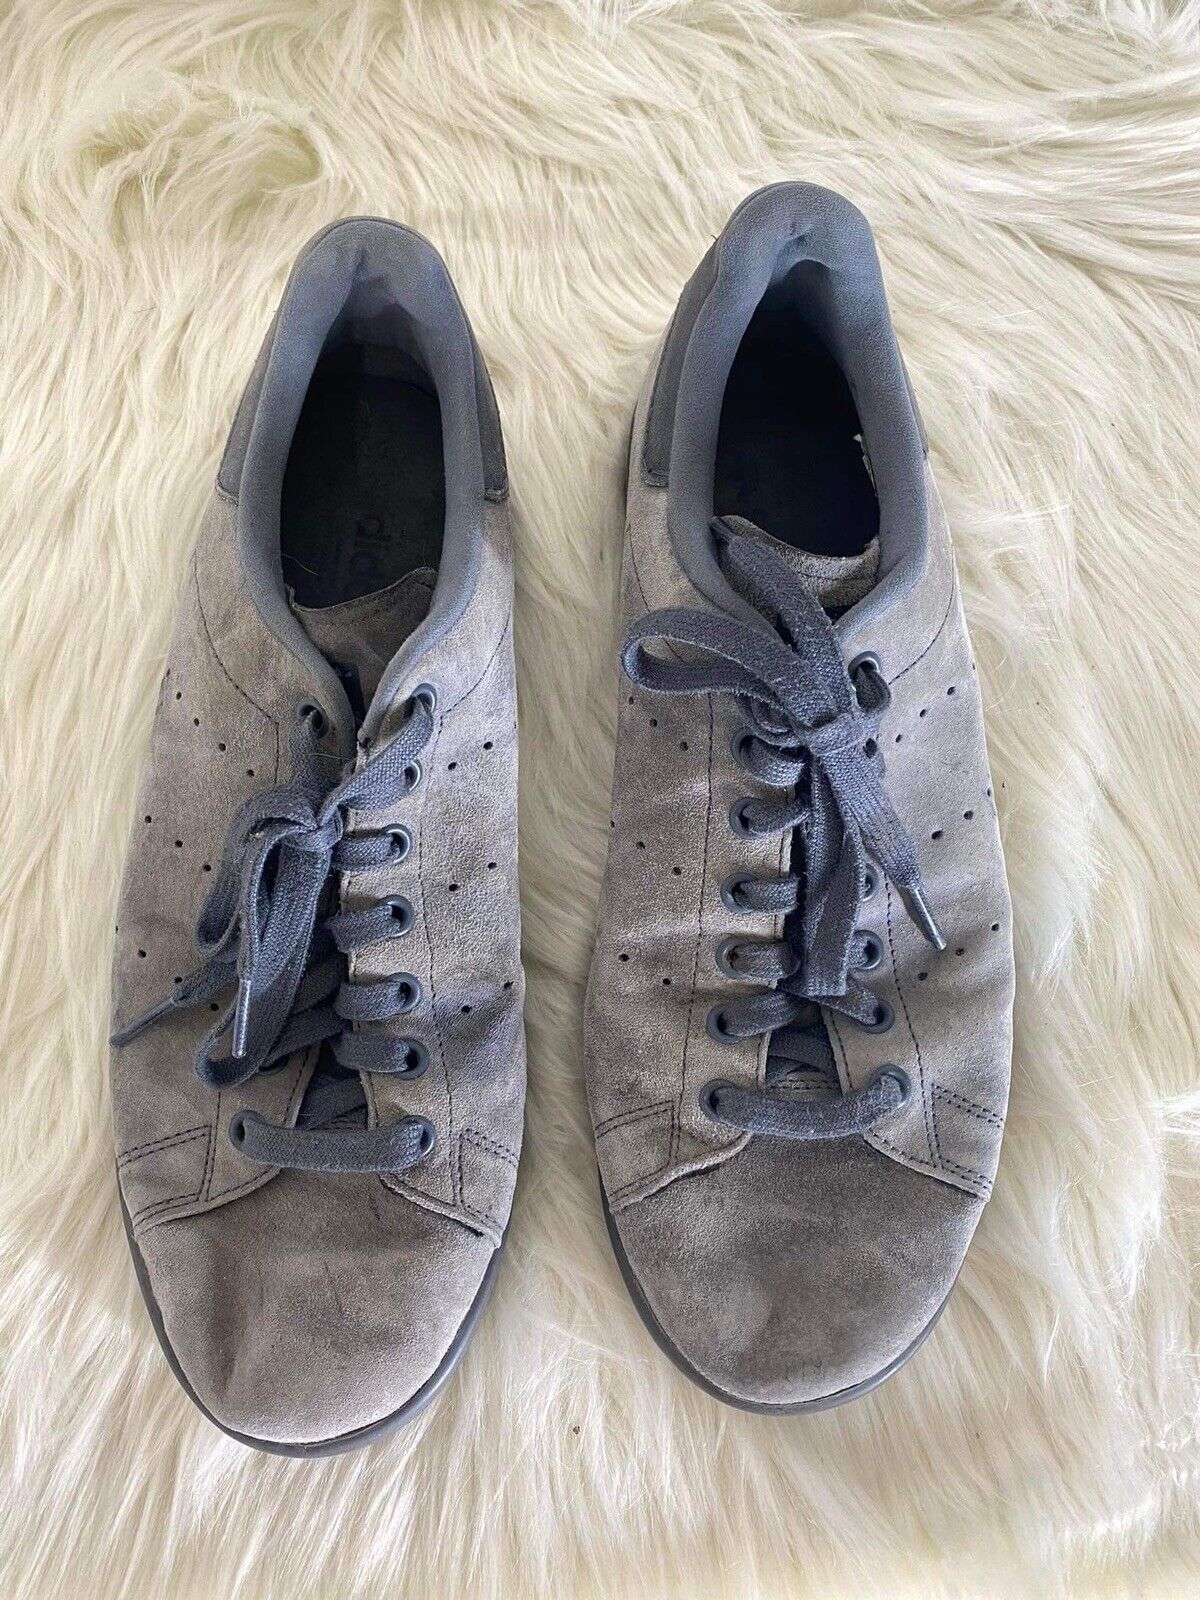 Adidas Stan Smith Grey Sneaker Shoes | eBay